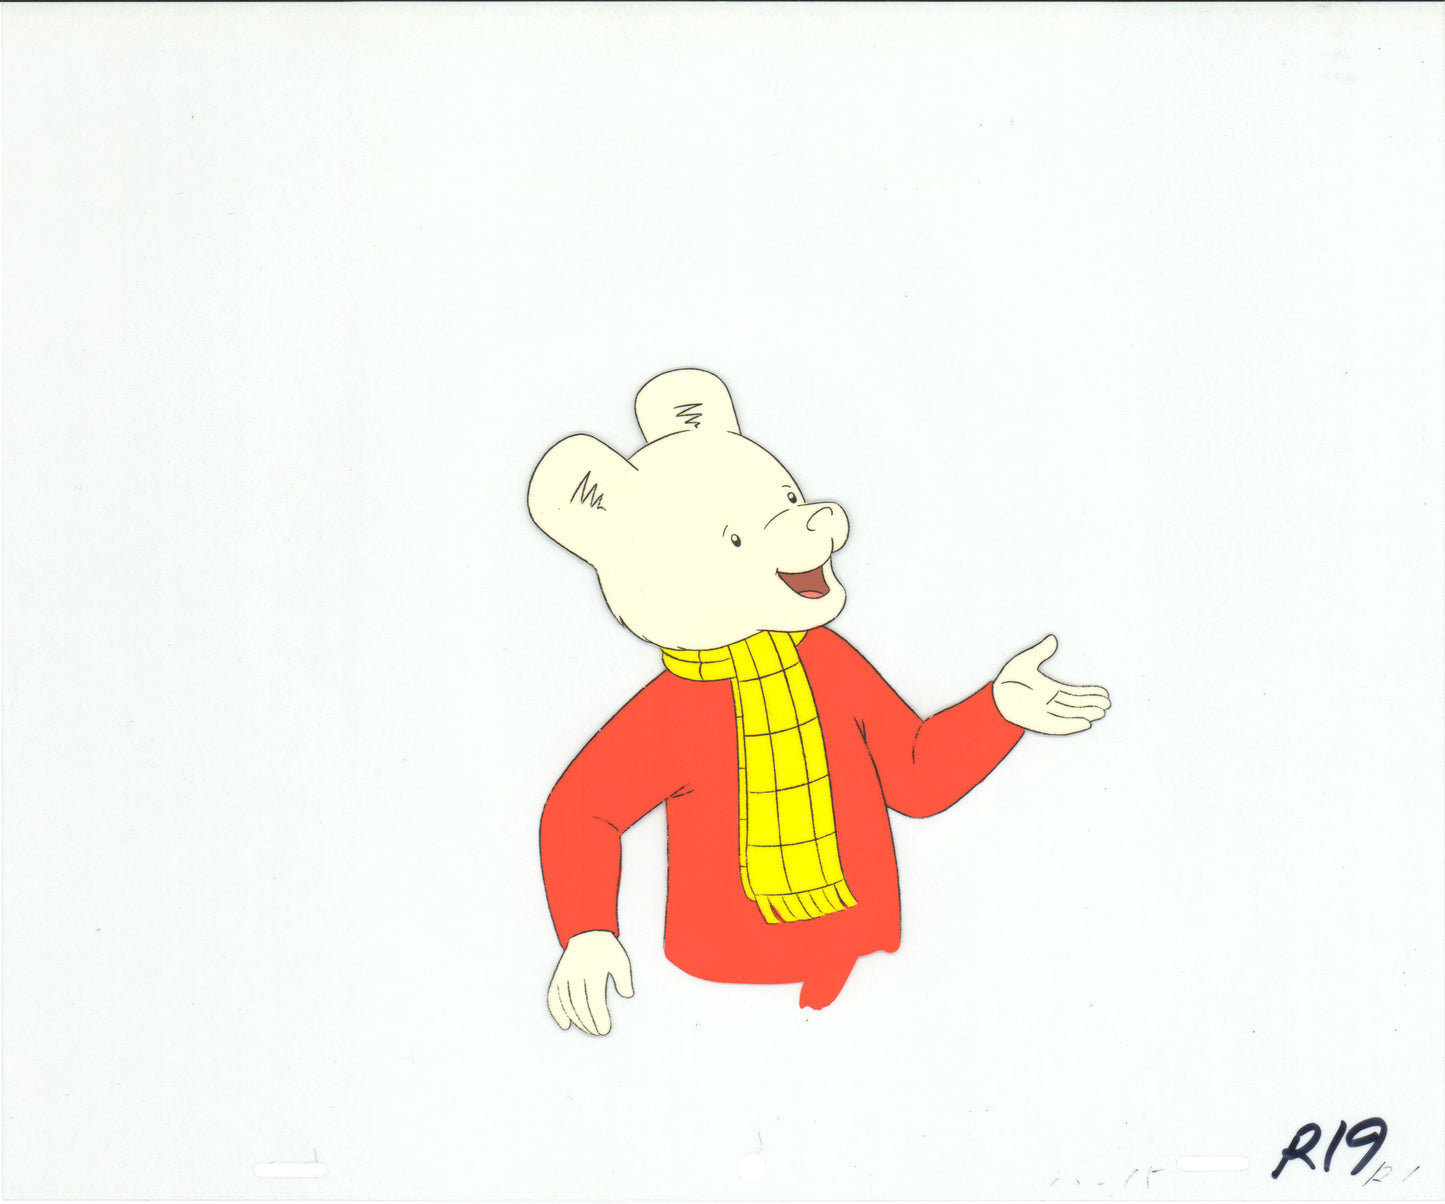 RUPERT Bear Original Production Animation Cel from the Cartoon by Nelvana Tourtel Animation 1990s 8-196